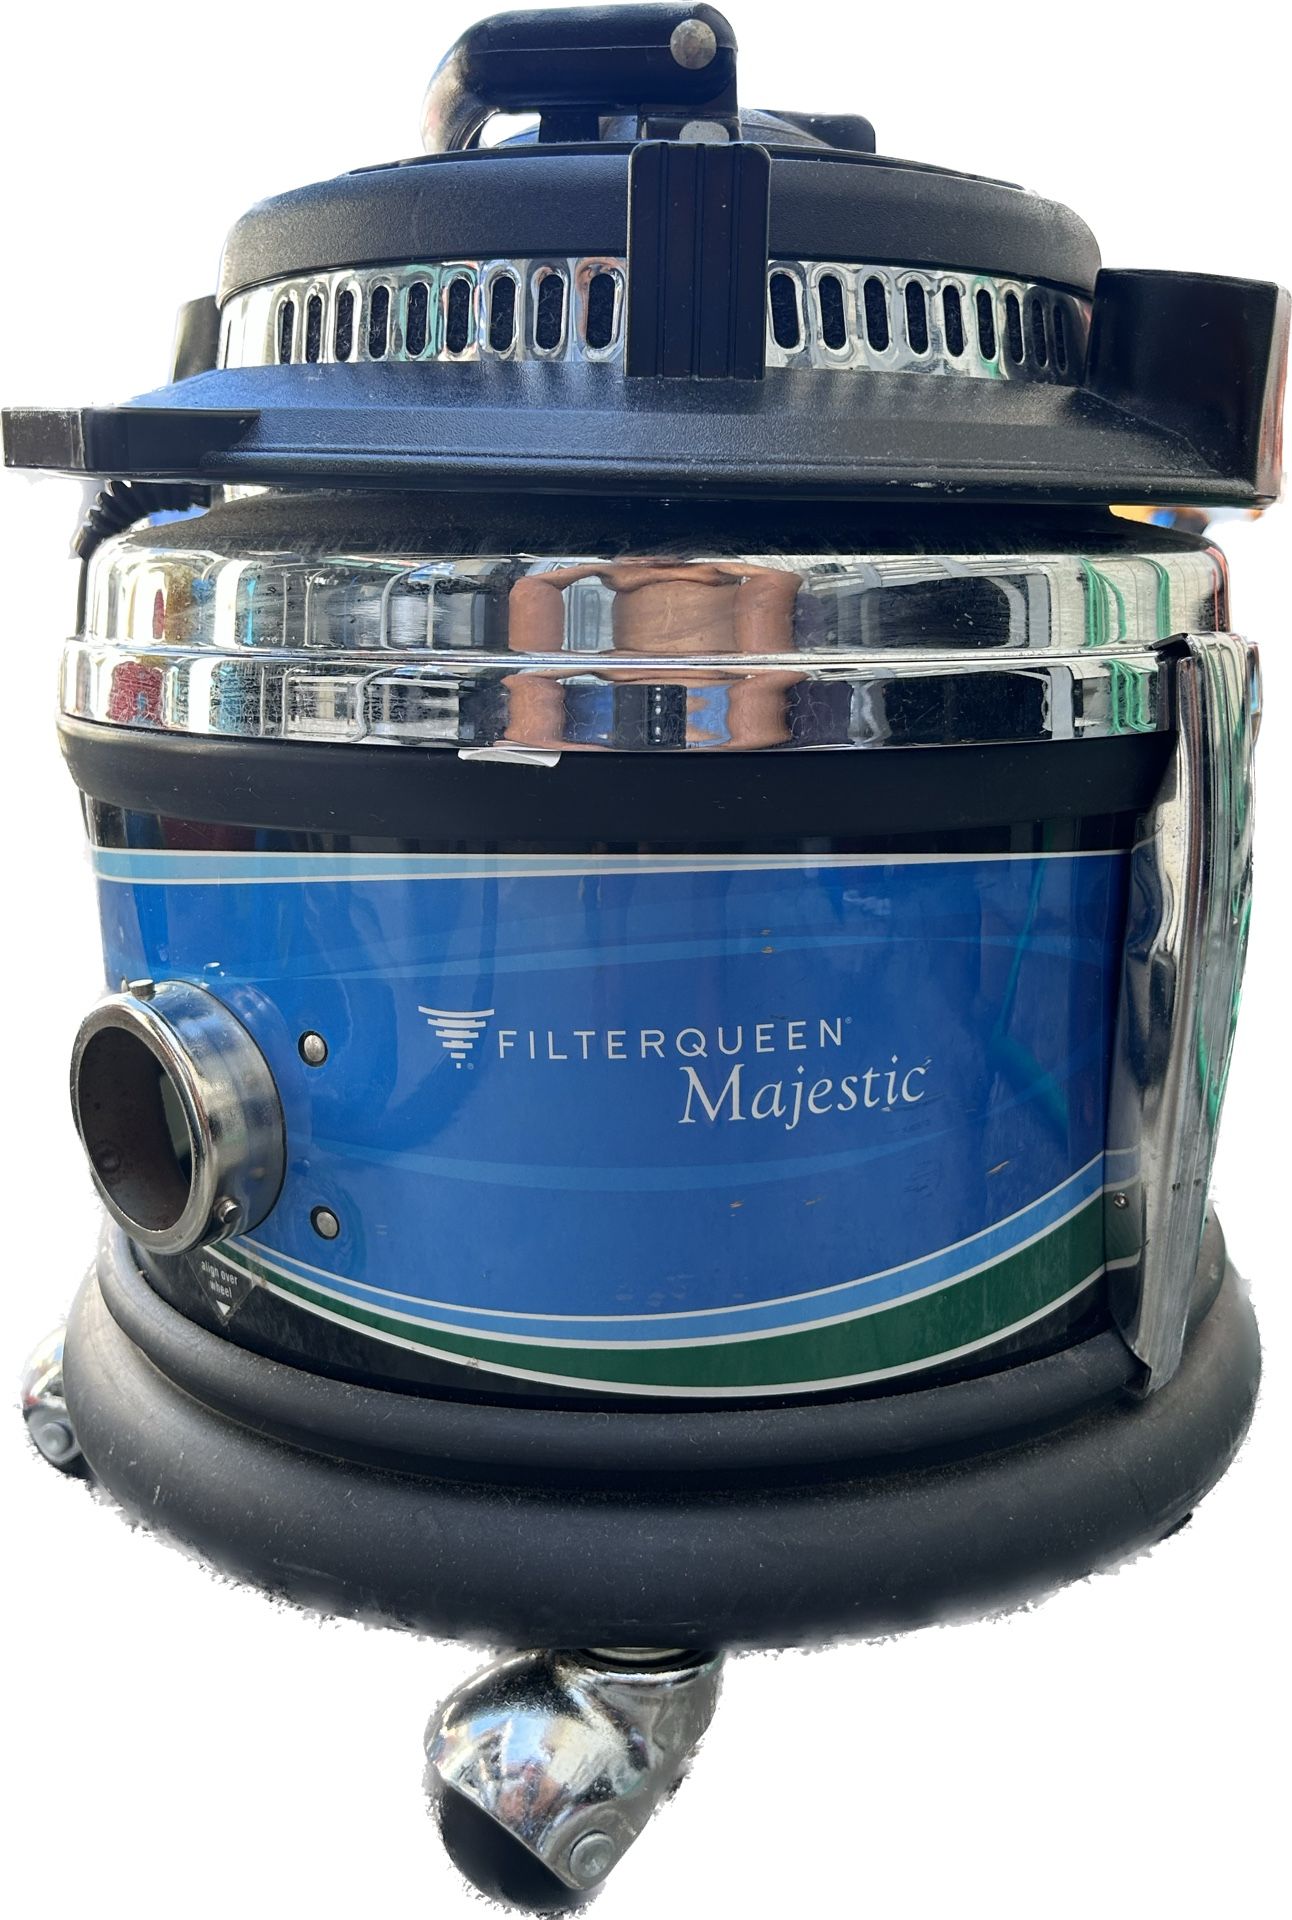 Filter Queen Majestic Vacuum Cleaner